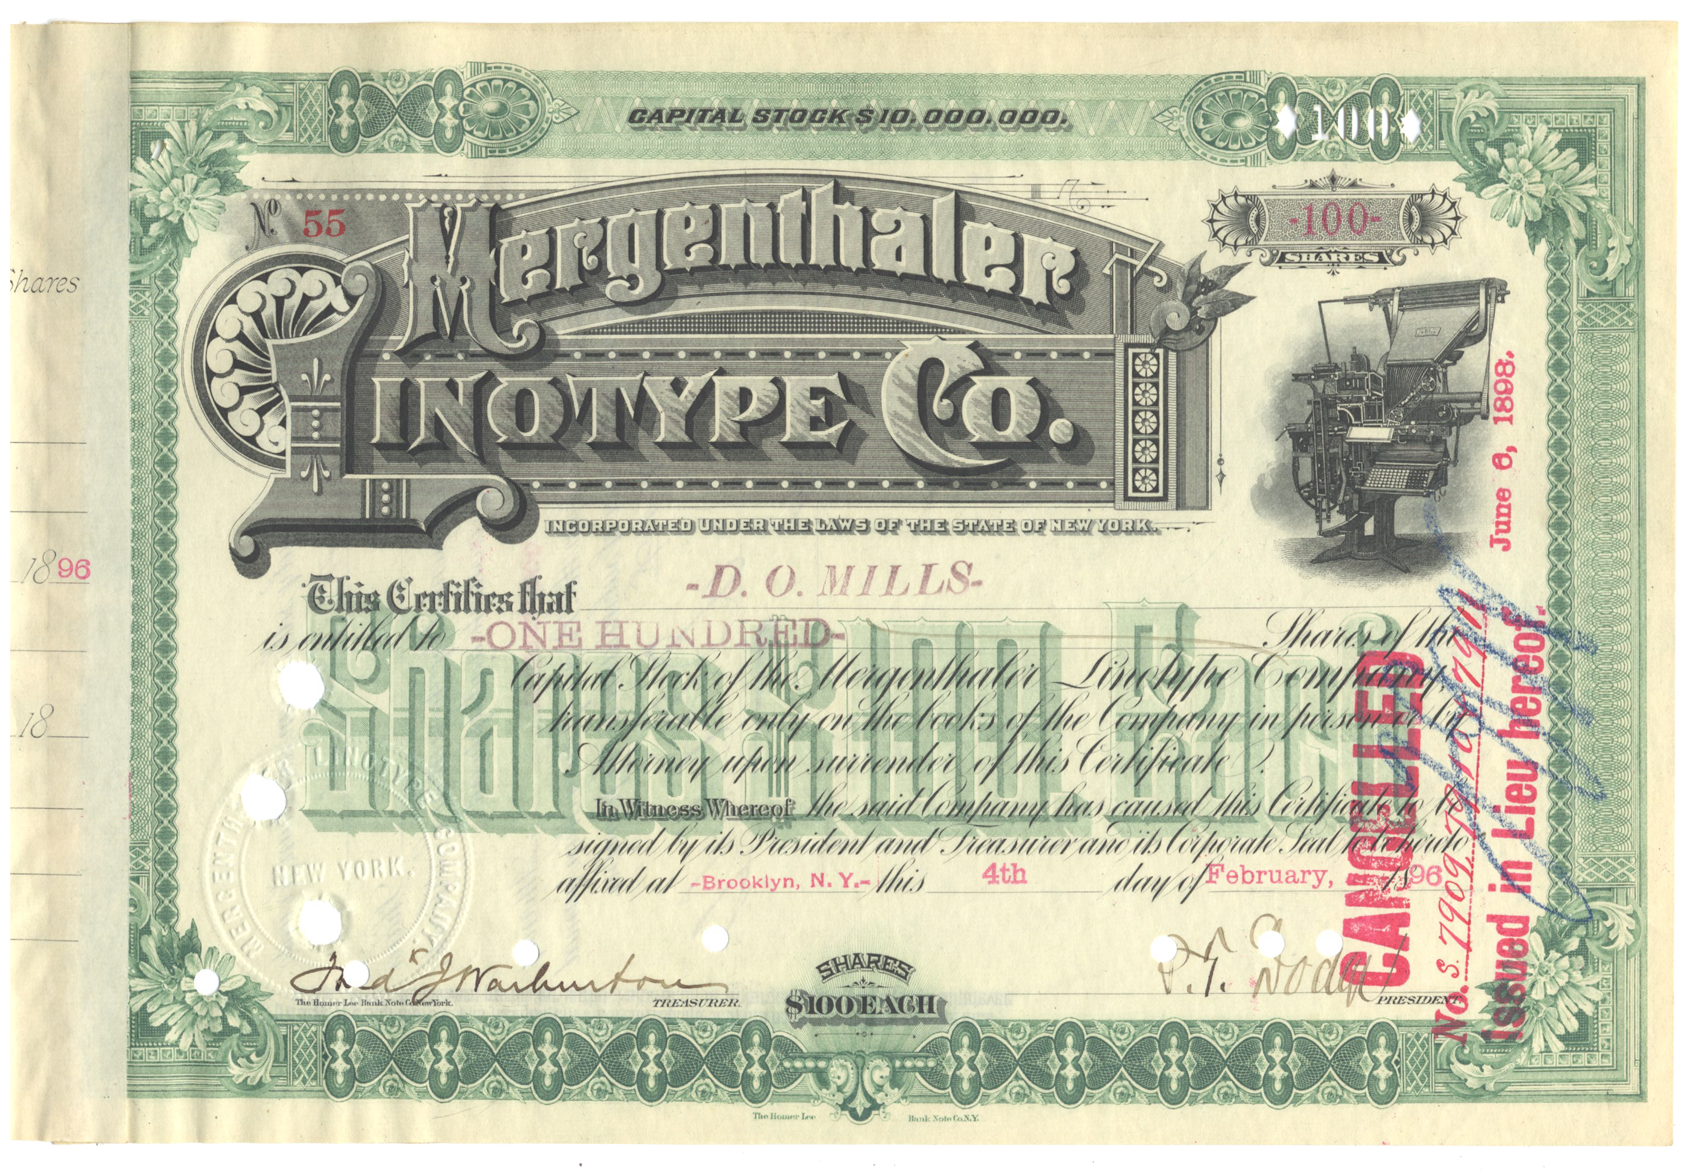 Mergenthaler Linotype Company Stock Certificate Signed by Ogden Mills